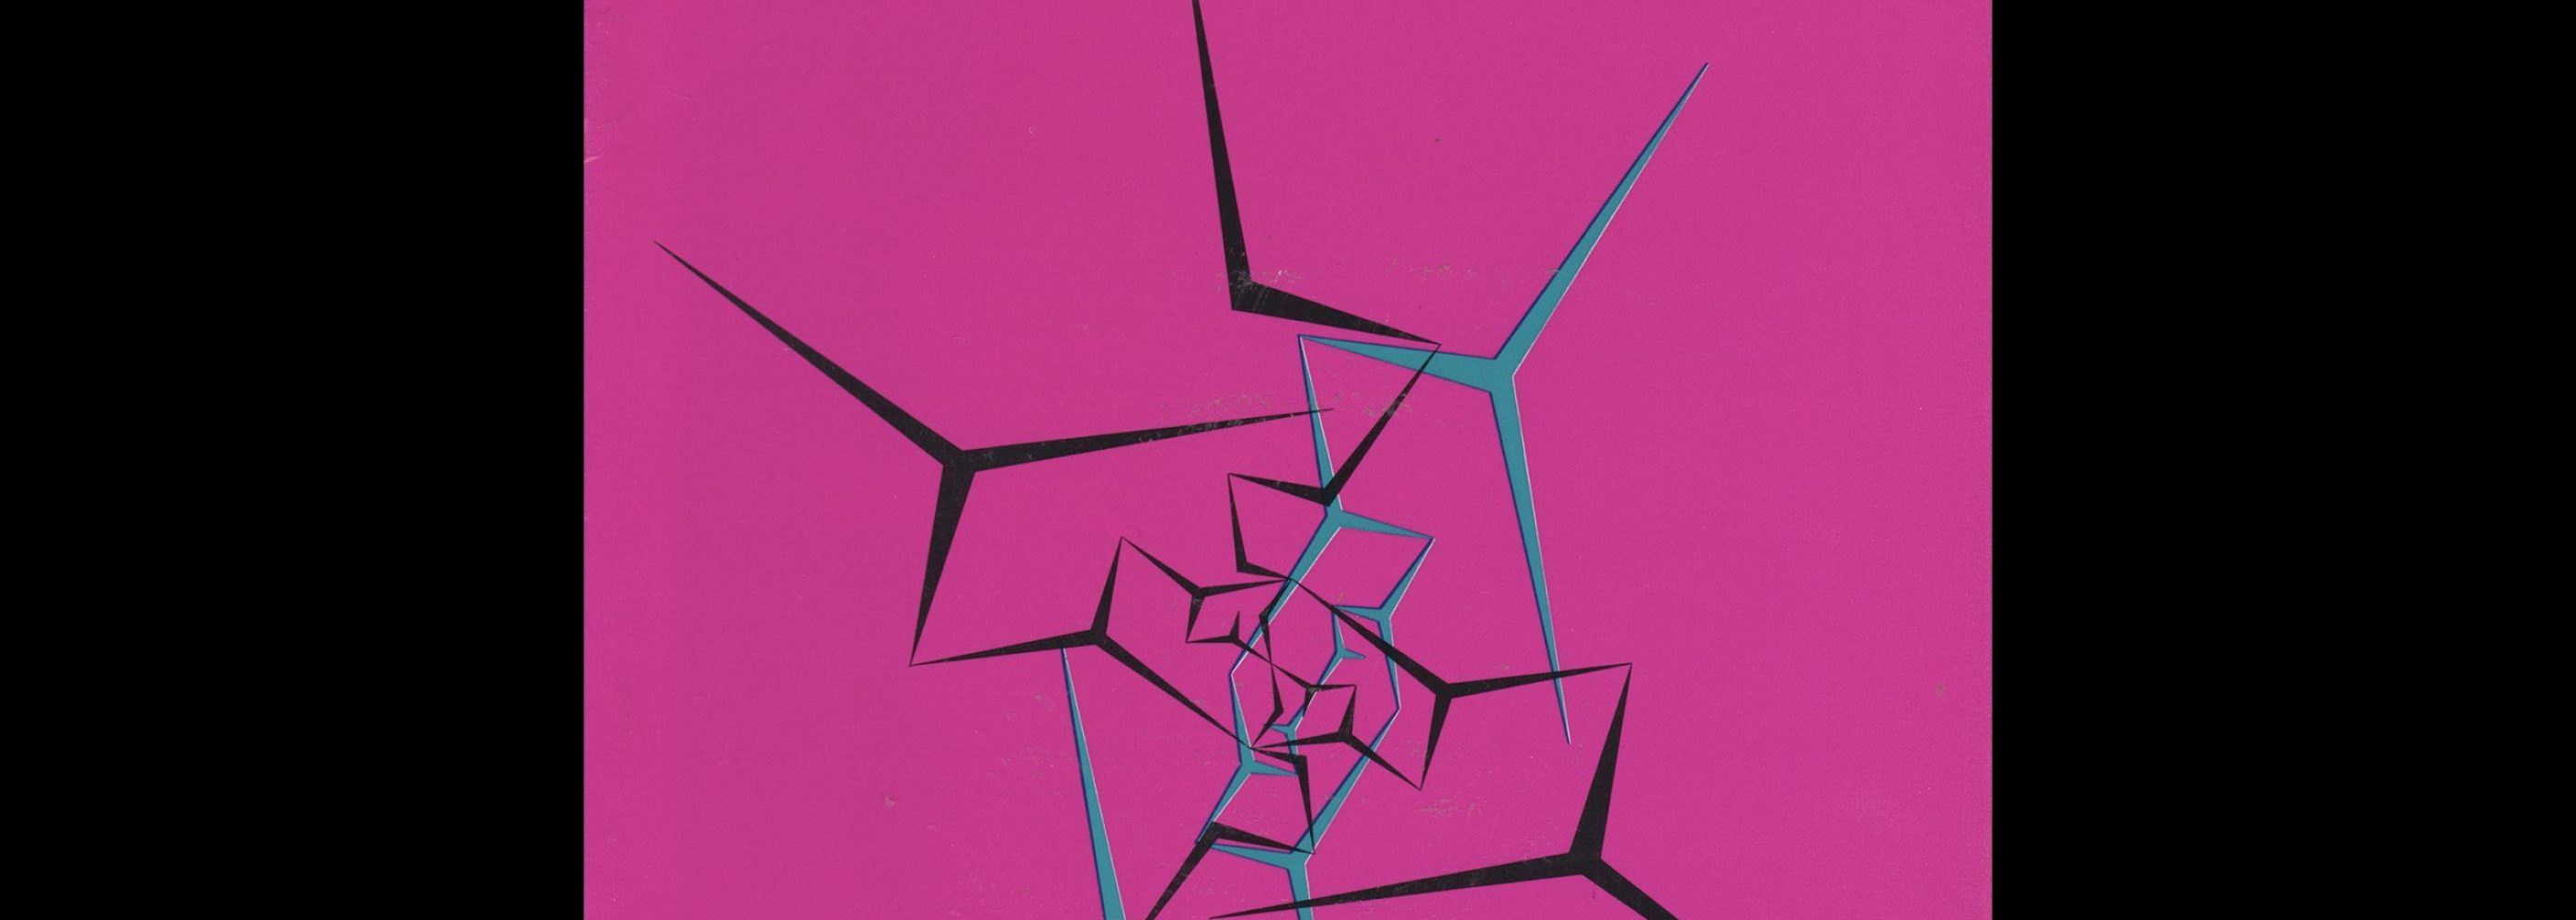 Industrial Art News - Vol. 39, No. 2, 1971. Cover design by Koji Kusabuka